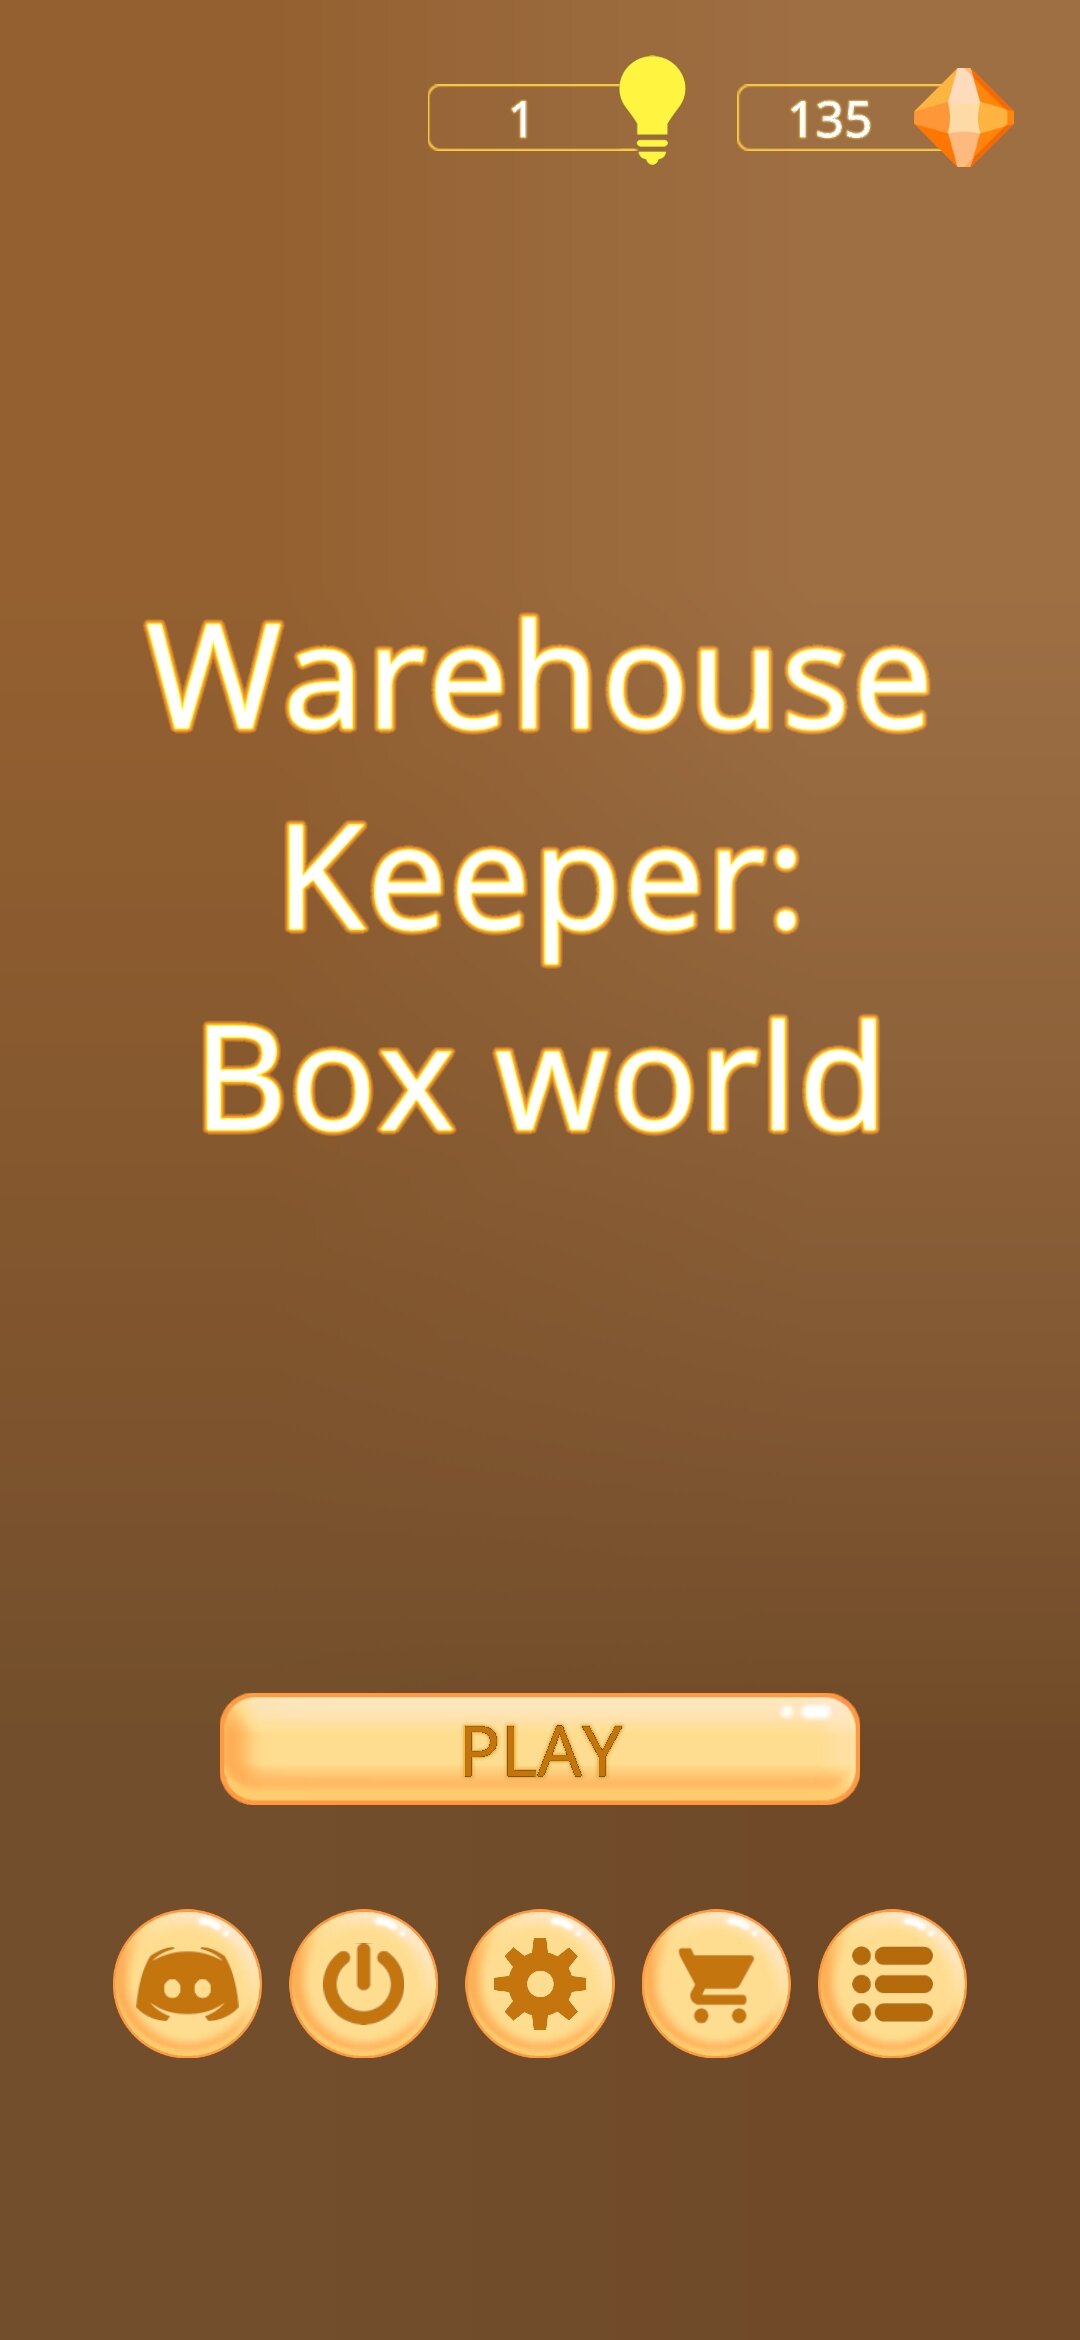 Warehouse Keeper: Box world